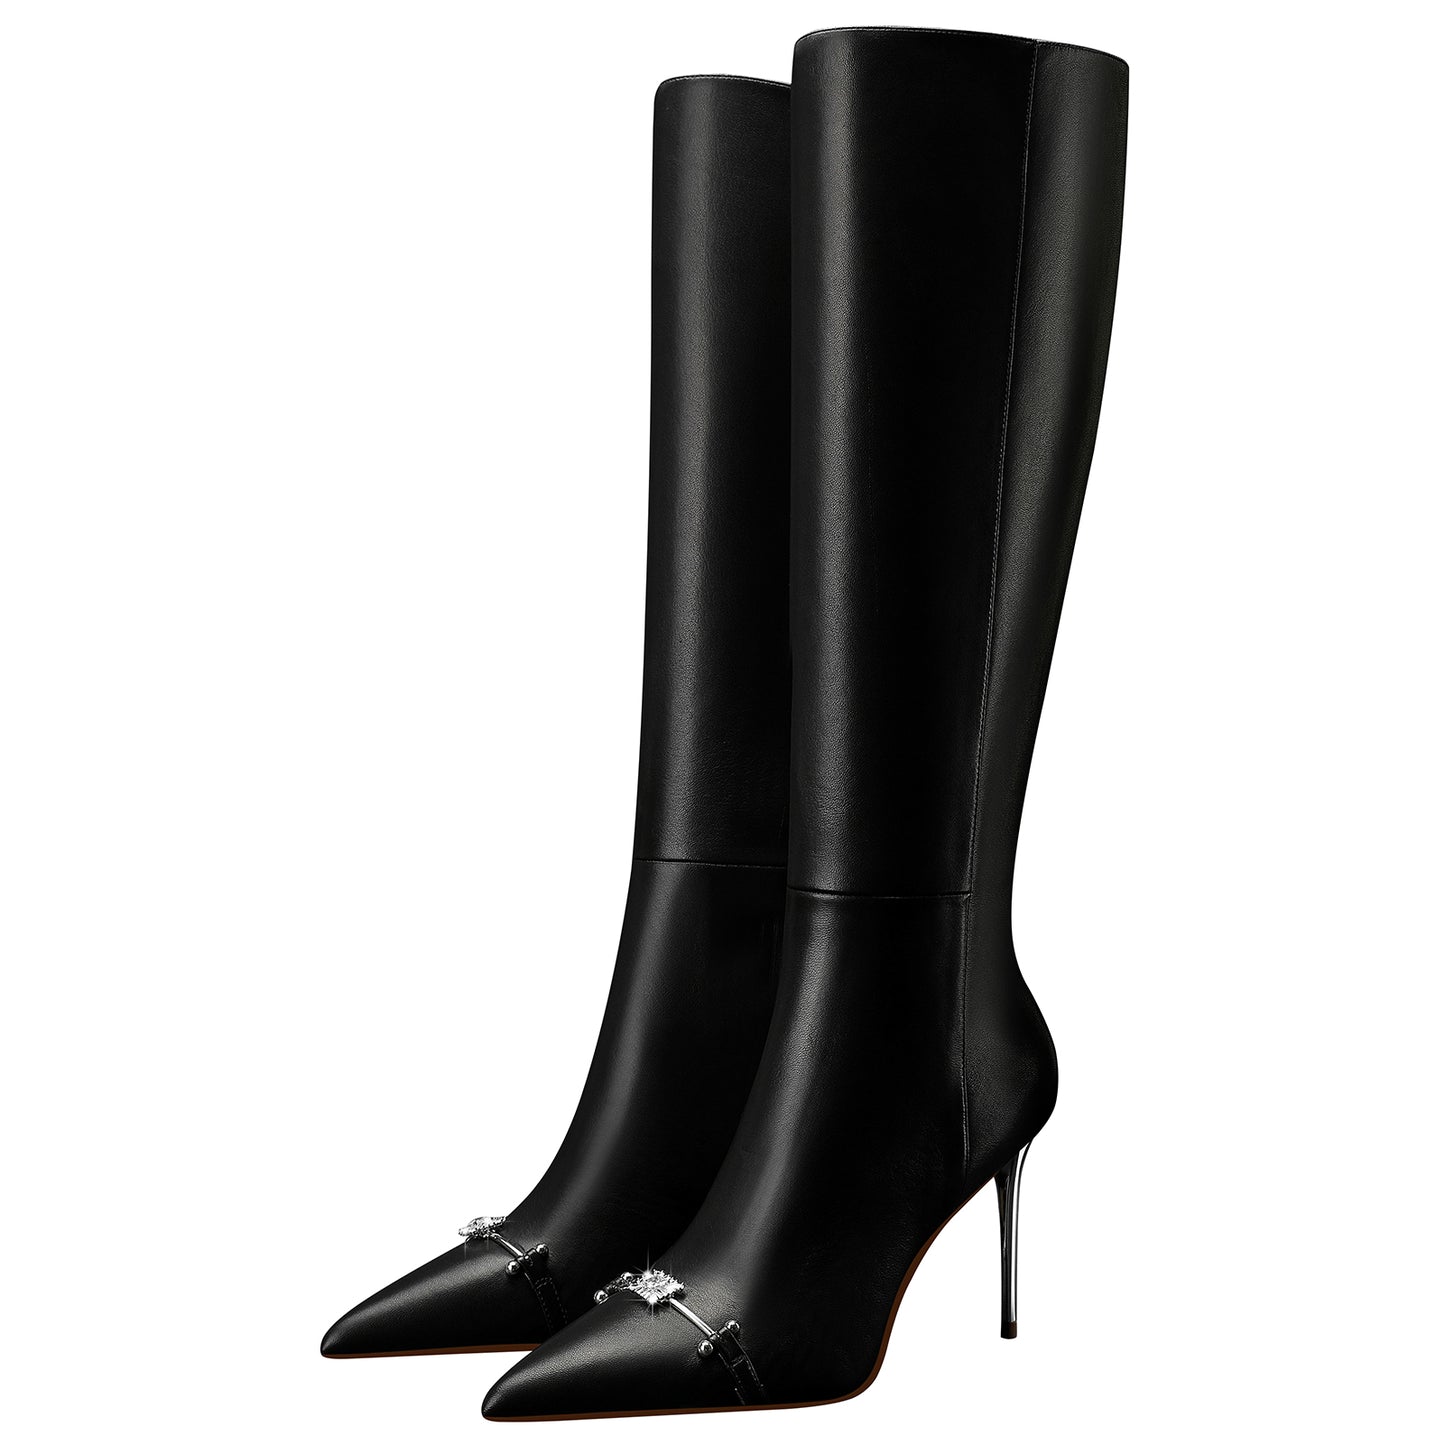 High Heels Knee Boots,Black Women Zipper Casual Tall Boots with Jewel